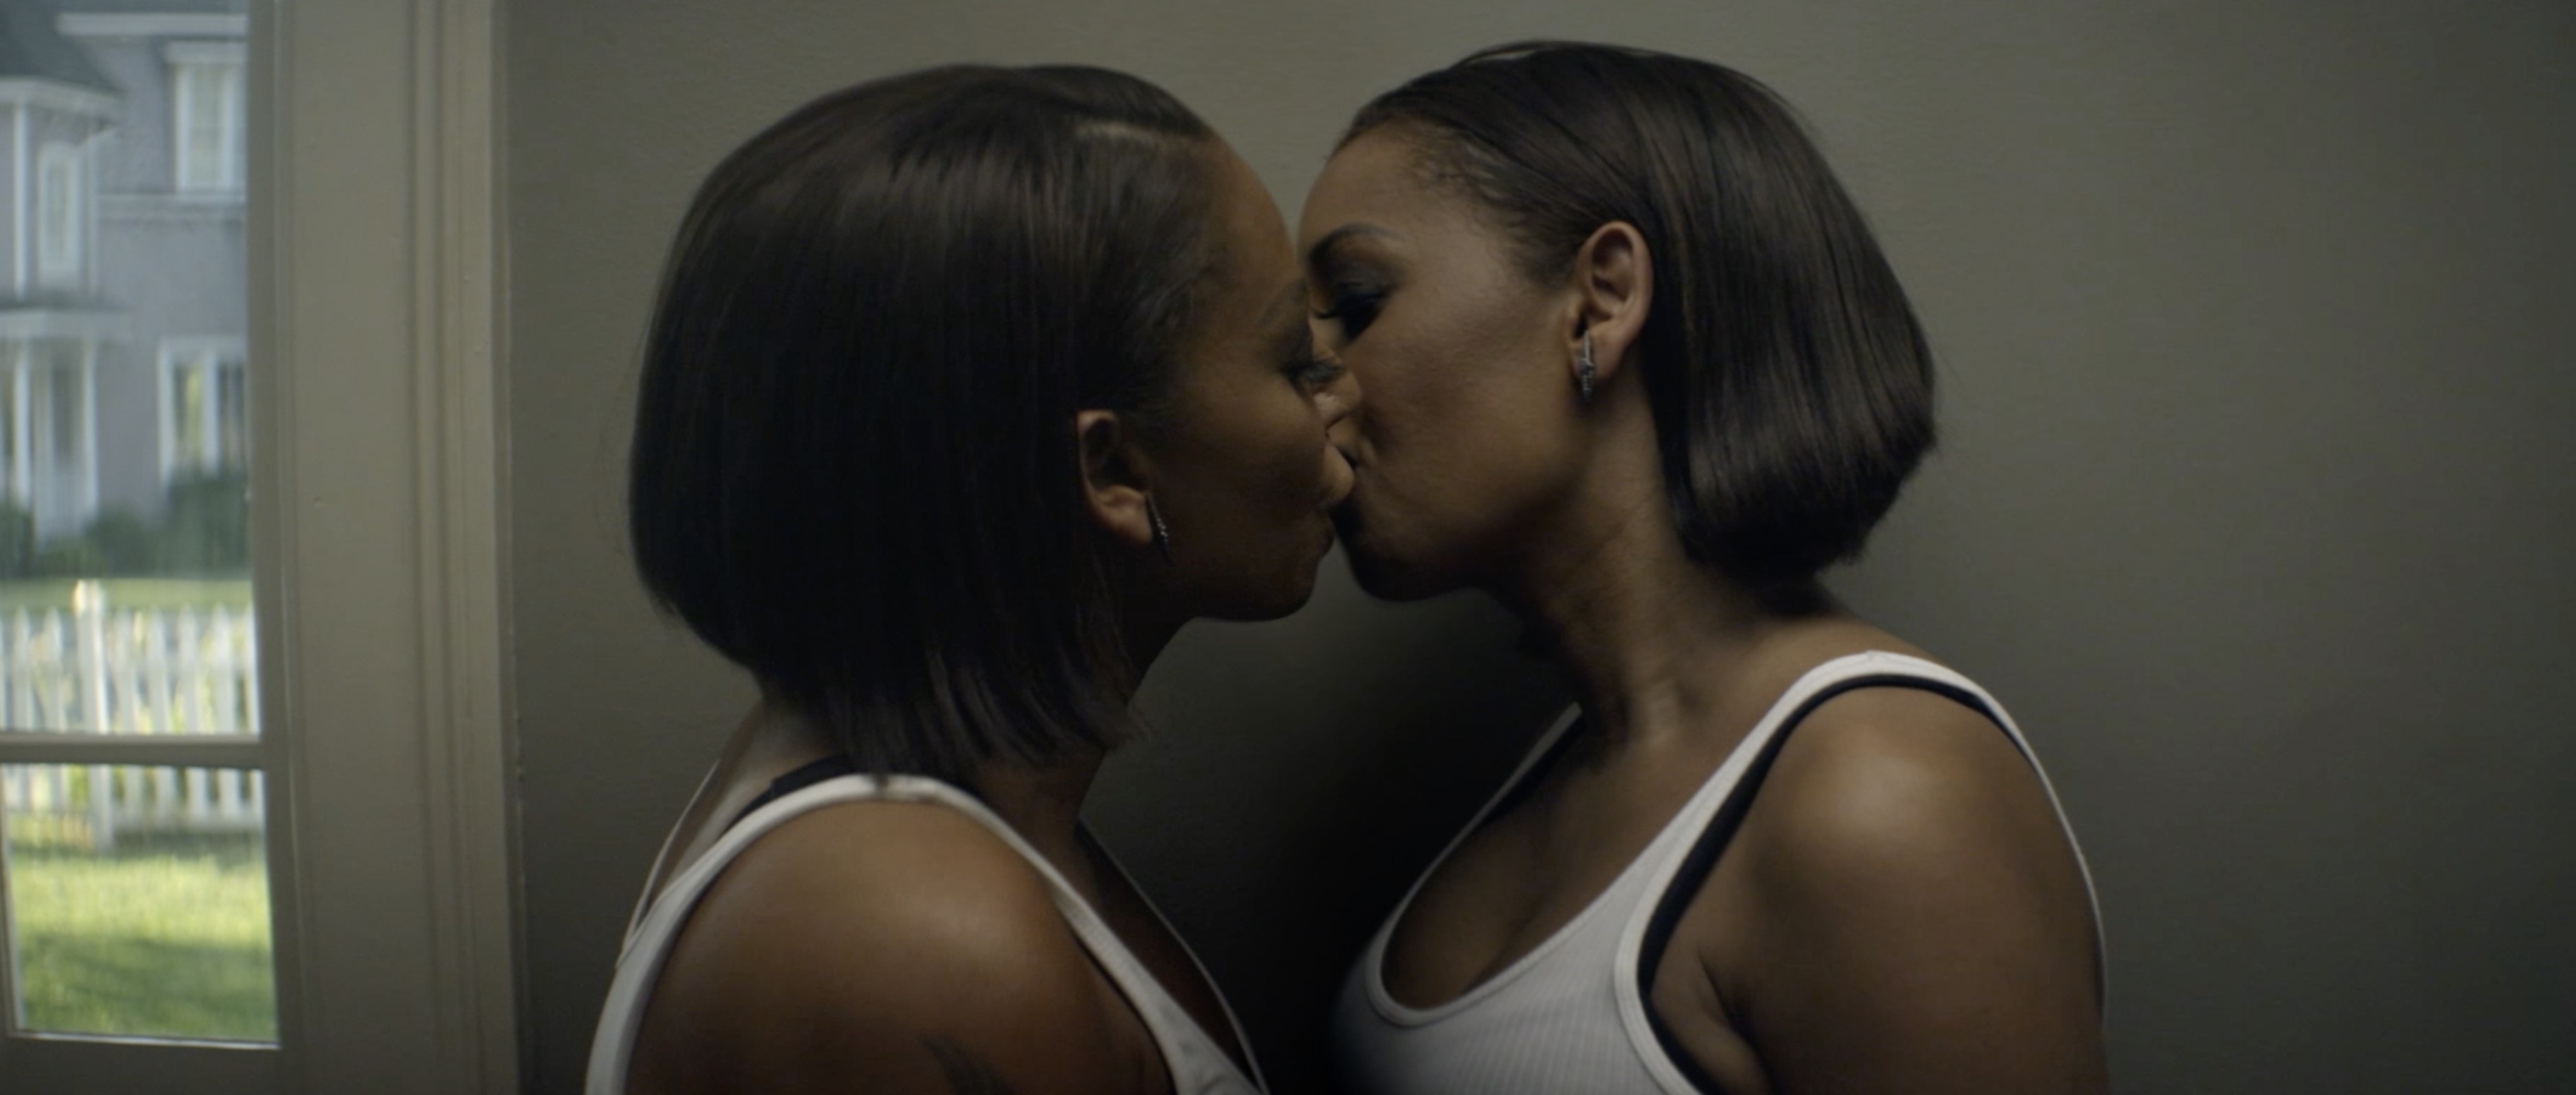 Black lesbian short film